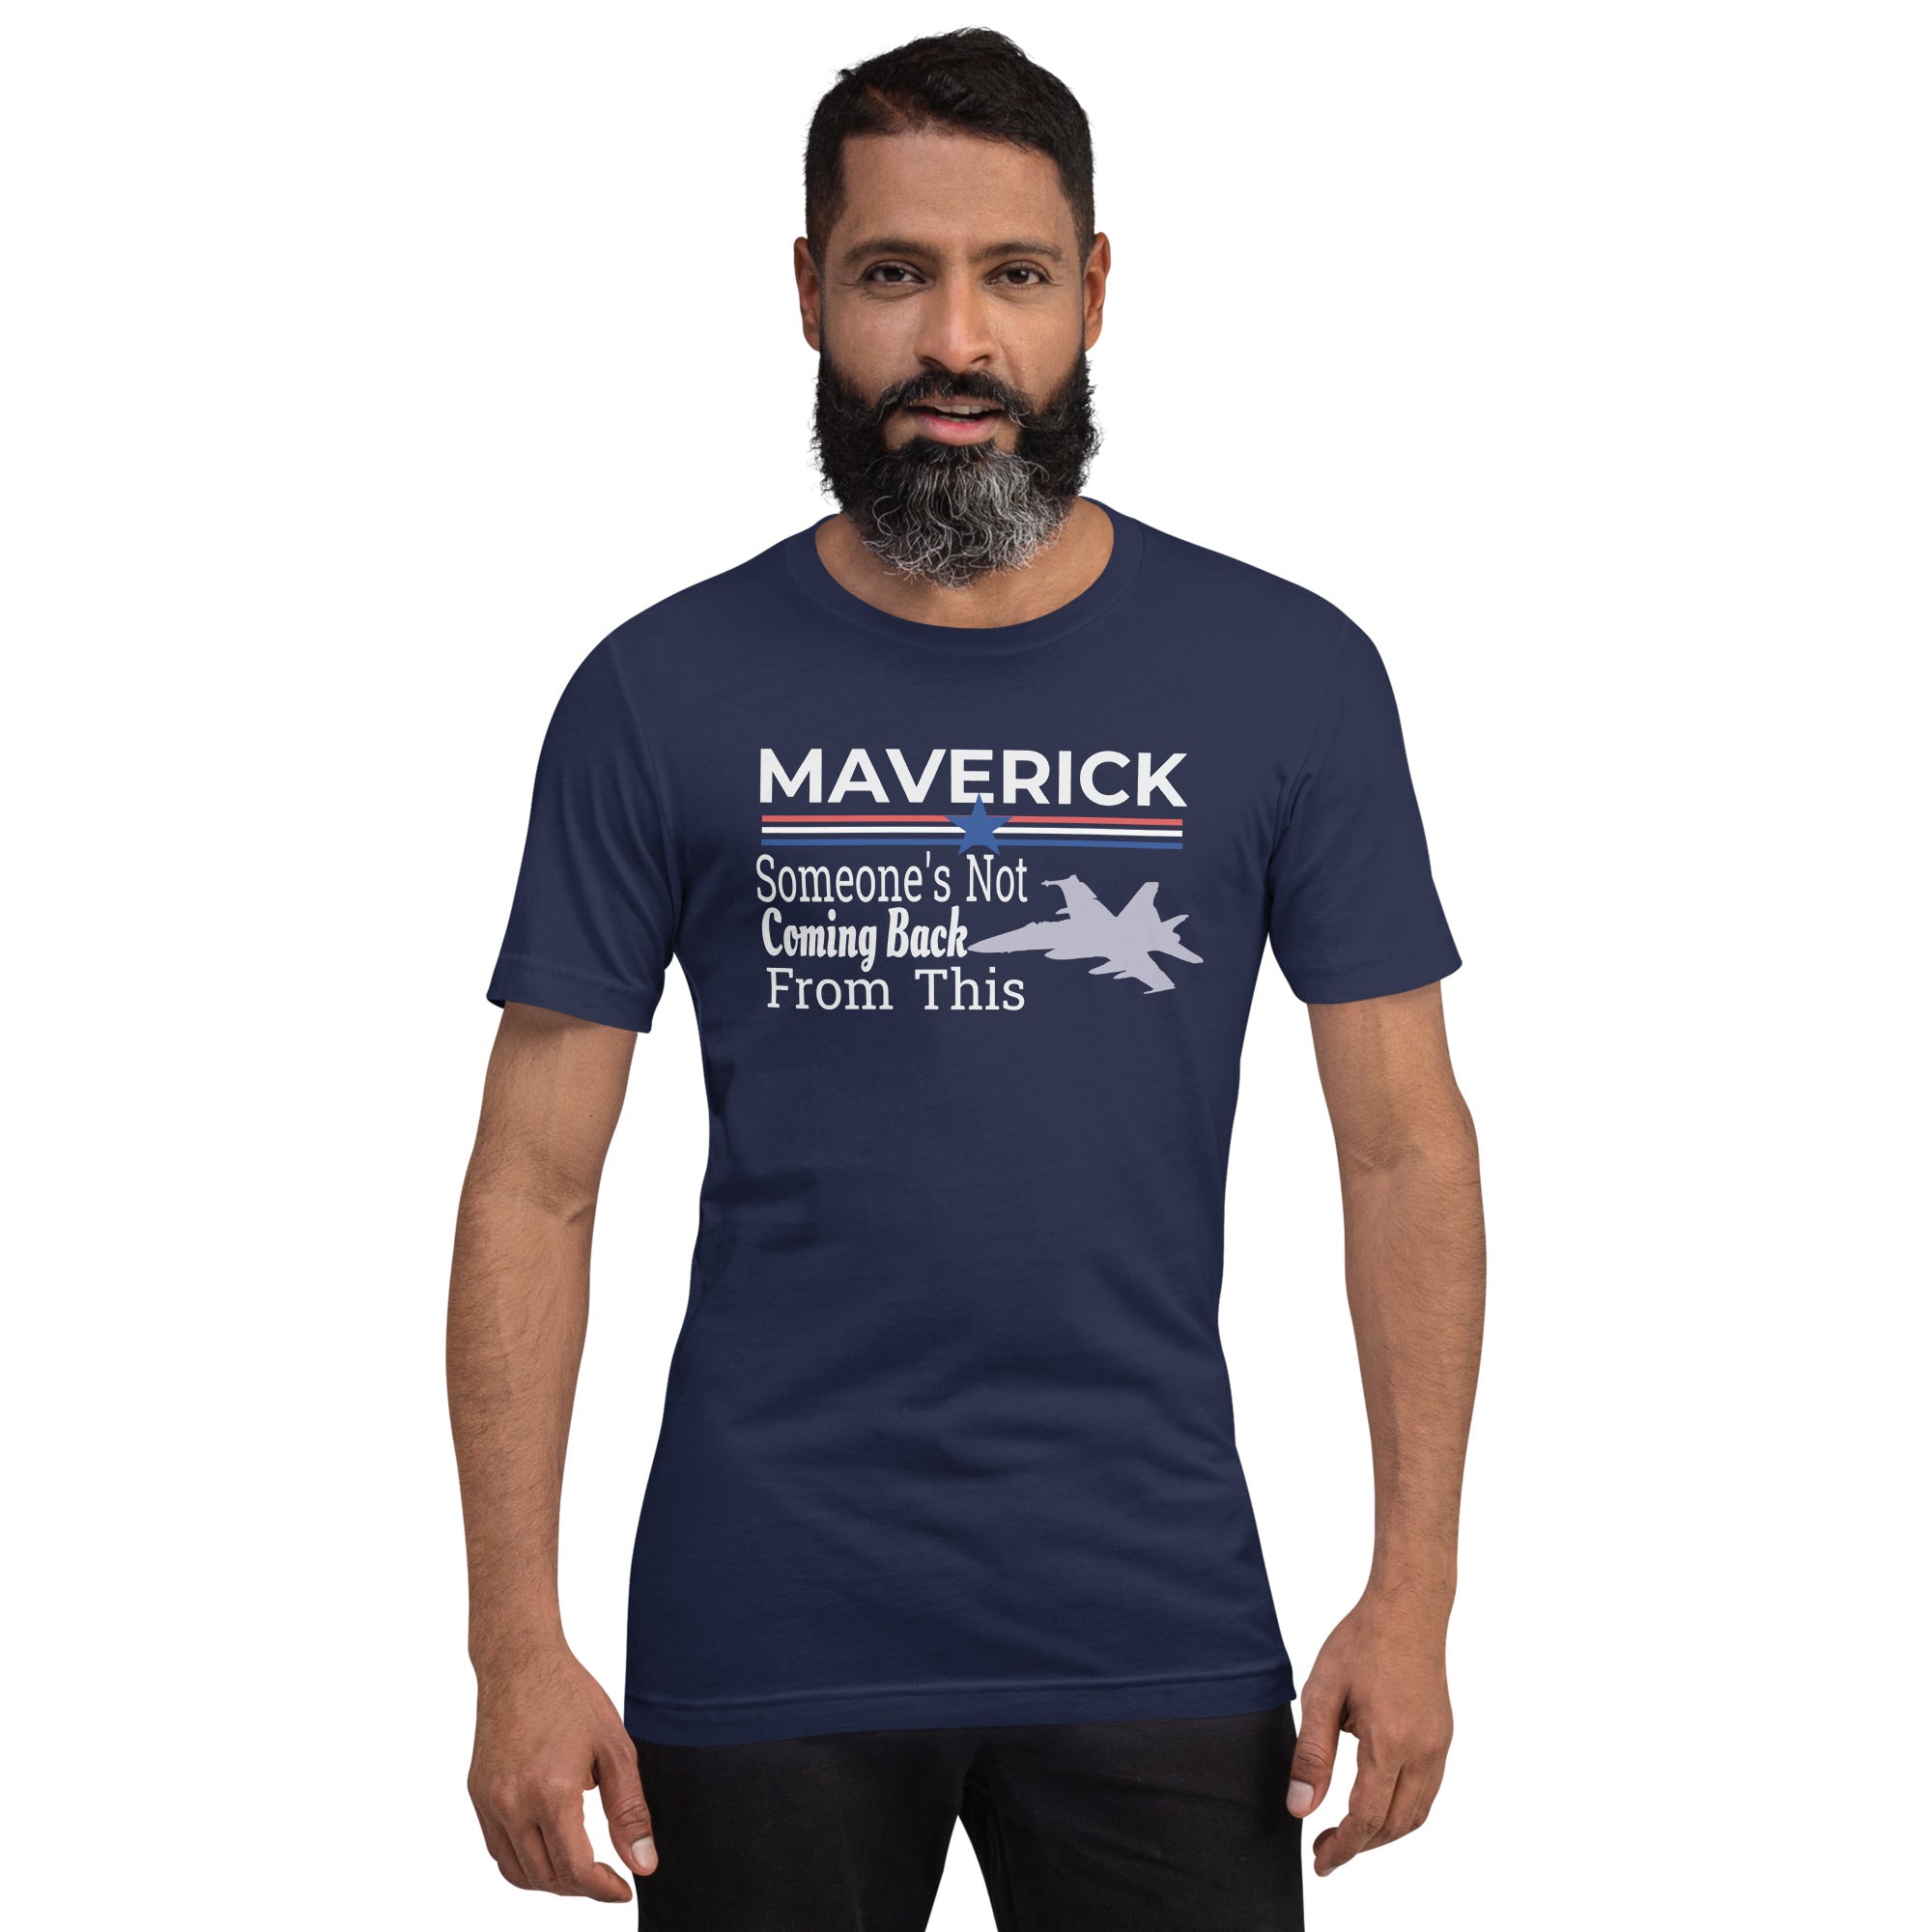 Maverick Top Gun Movie Quote T-Shirt for Fans of the Top Gun Sequel